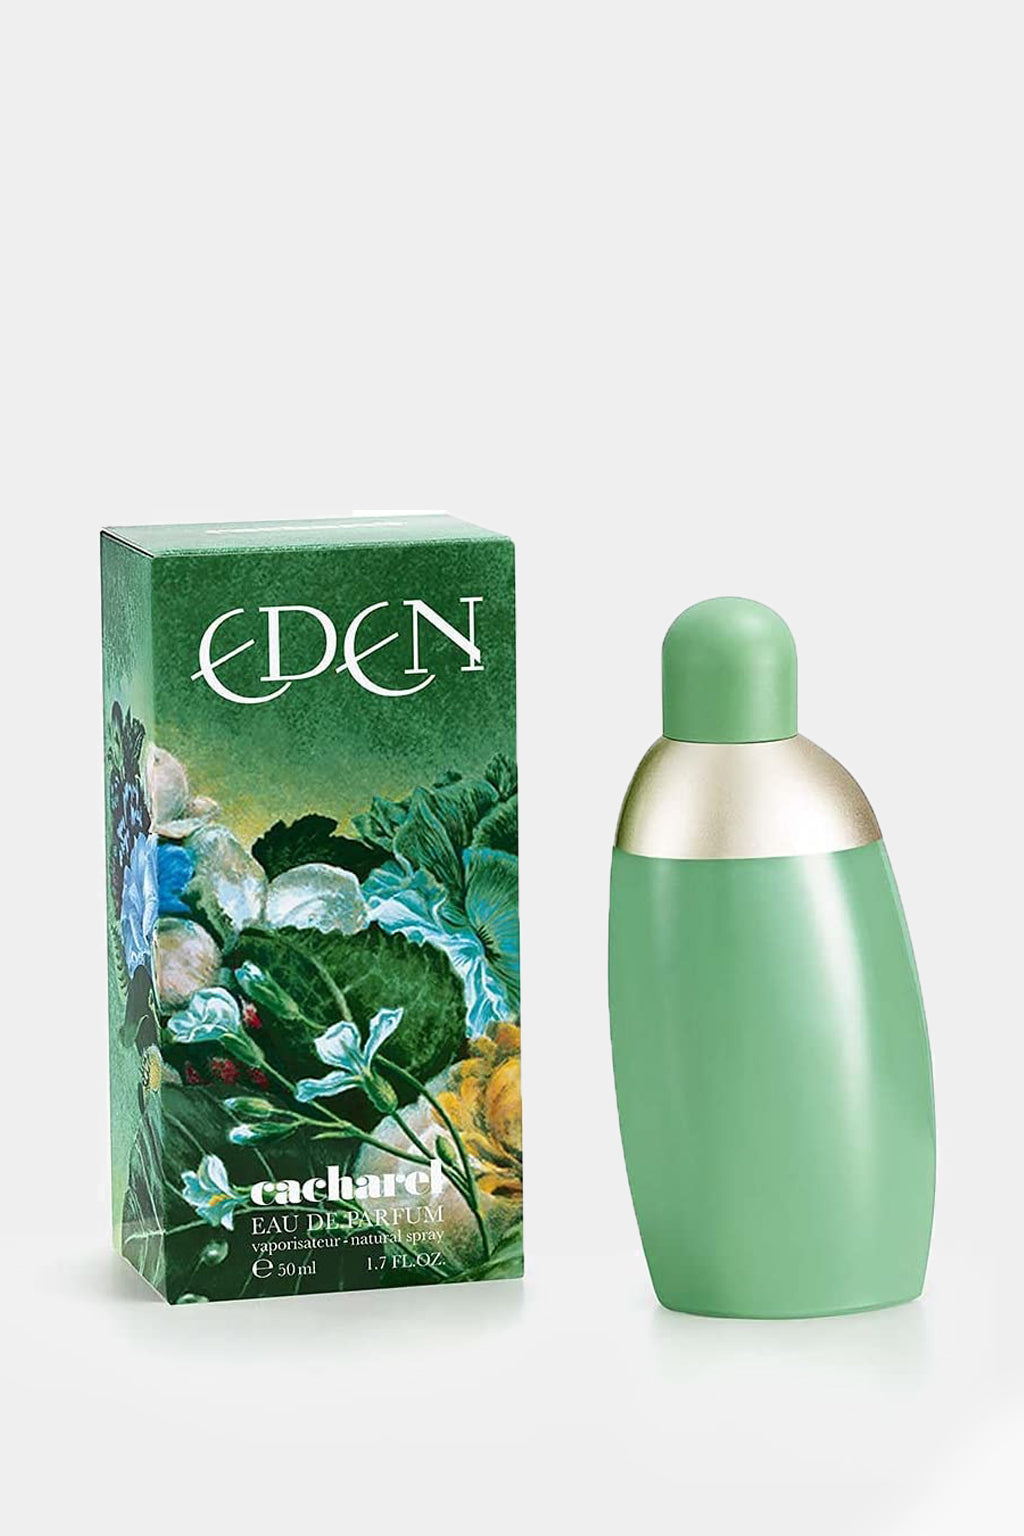 Eden - Eden By Cacharel - Eau De Parfum, 50ml (Women)